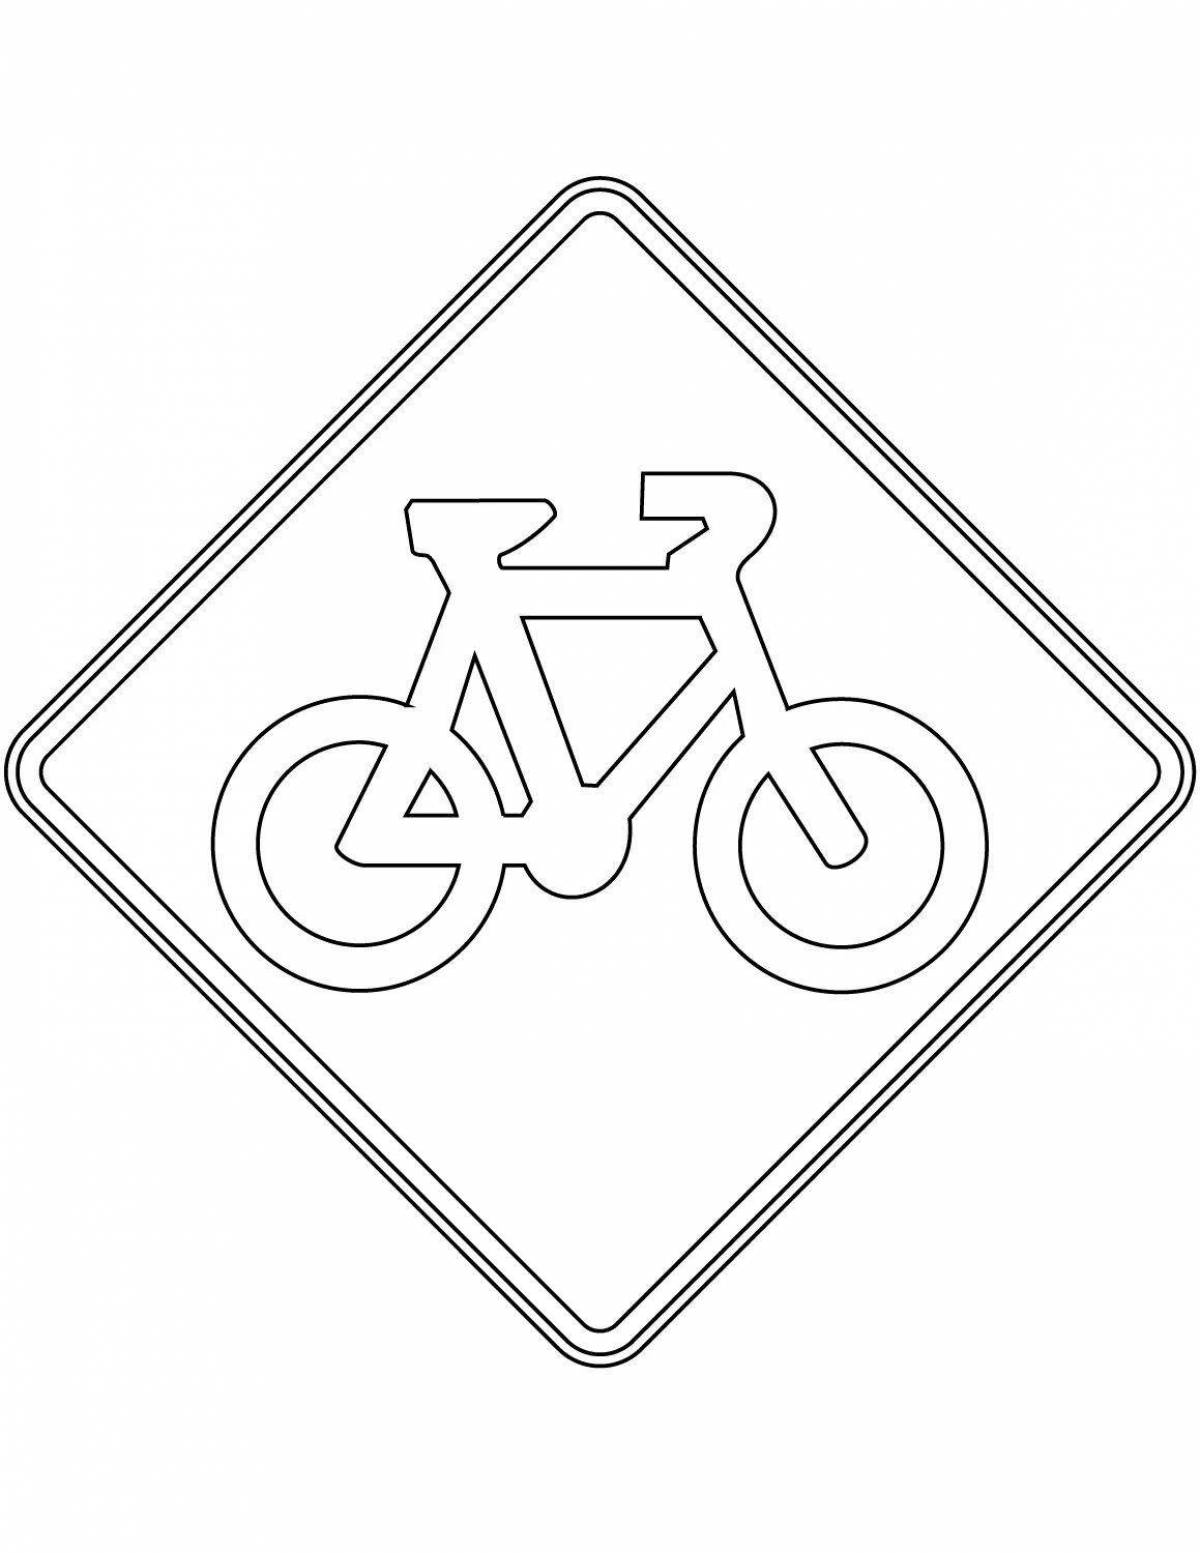 Coloring page bold bike lane sign